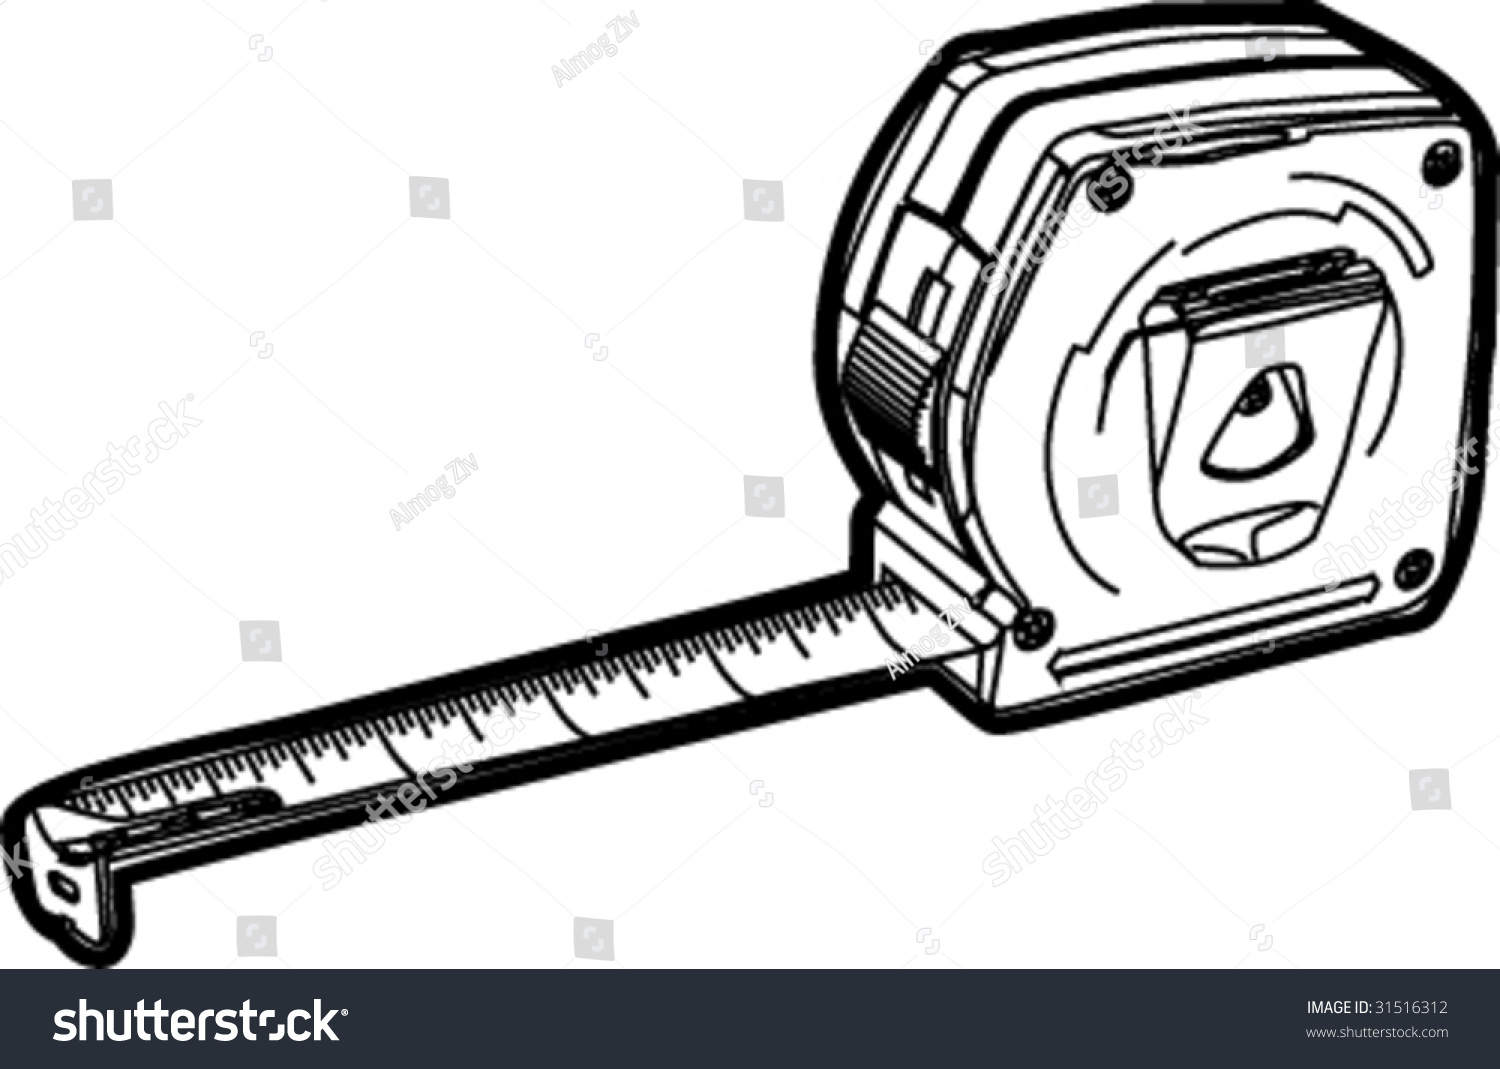 Meter Tool Stock Vector Illustration 31516312 : Shutterstock